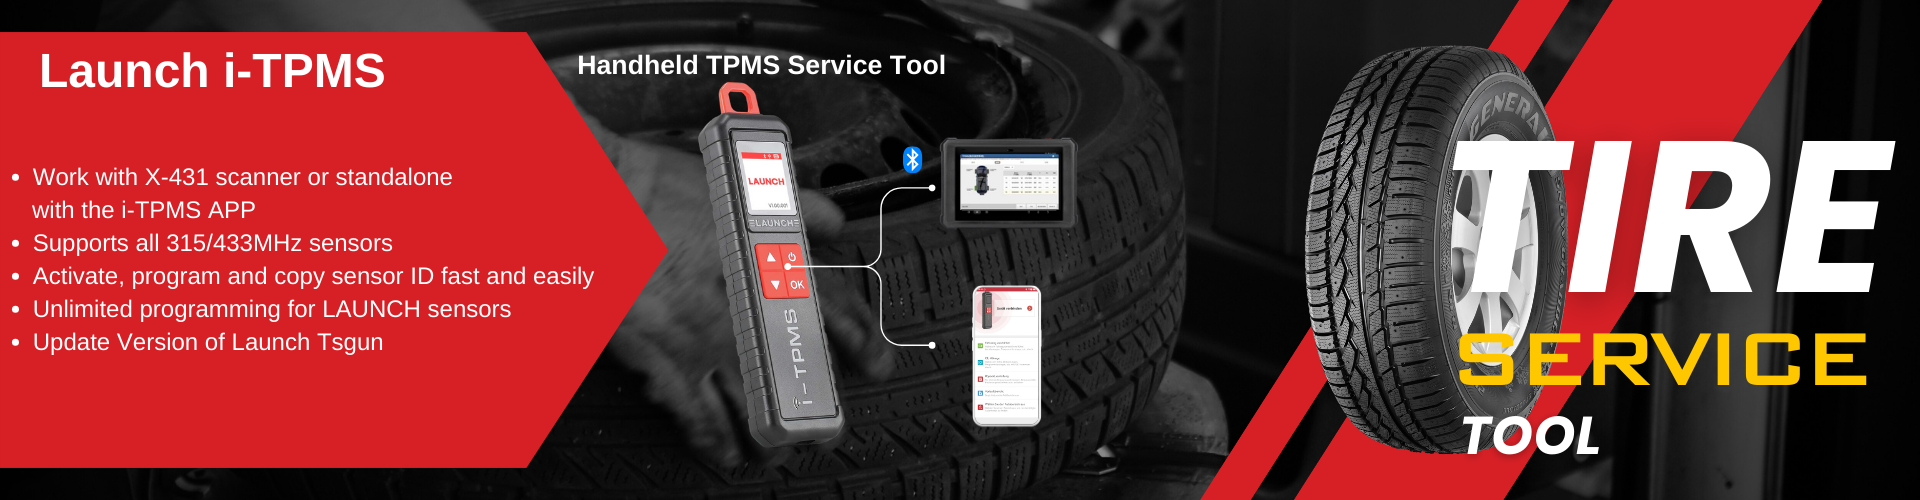 Launch i-TPMS Handheld TPMS Service Tool